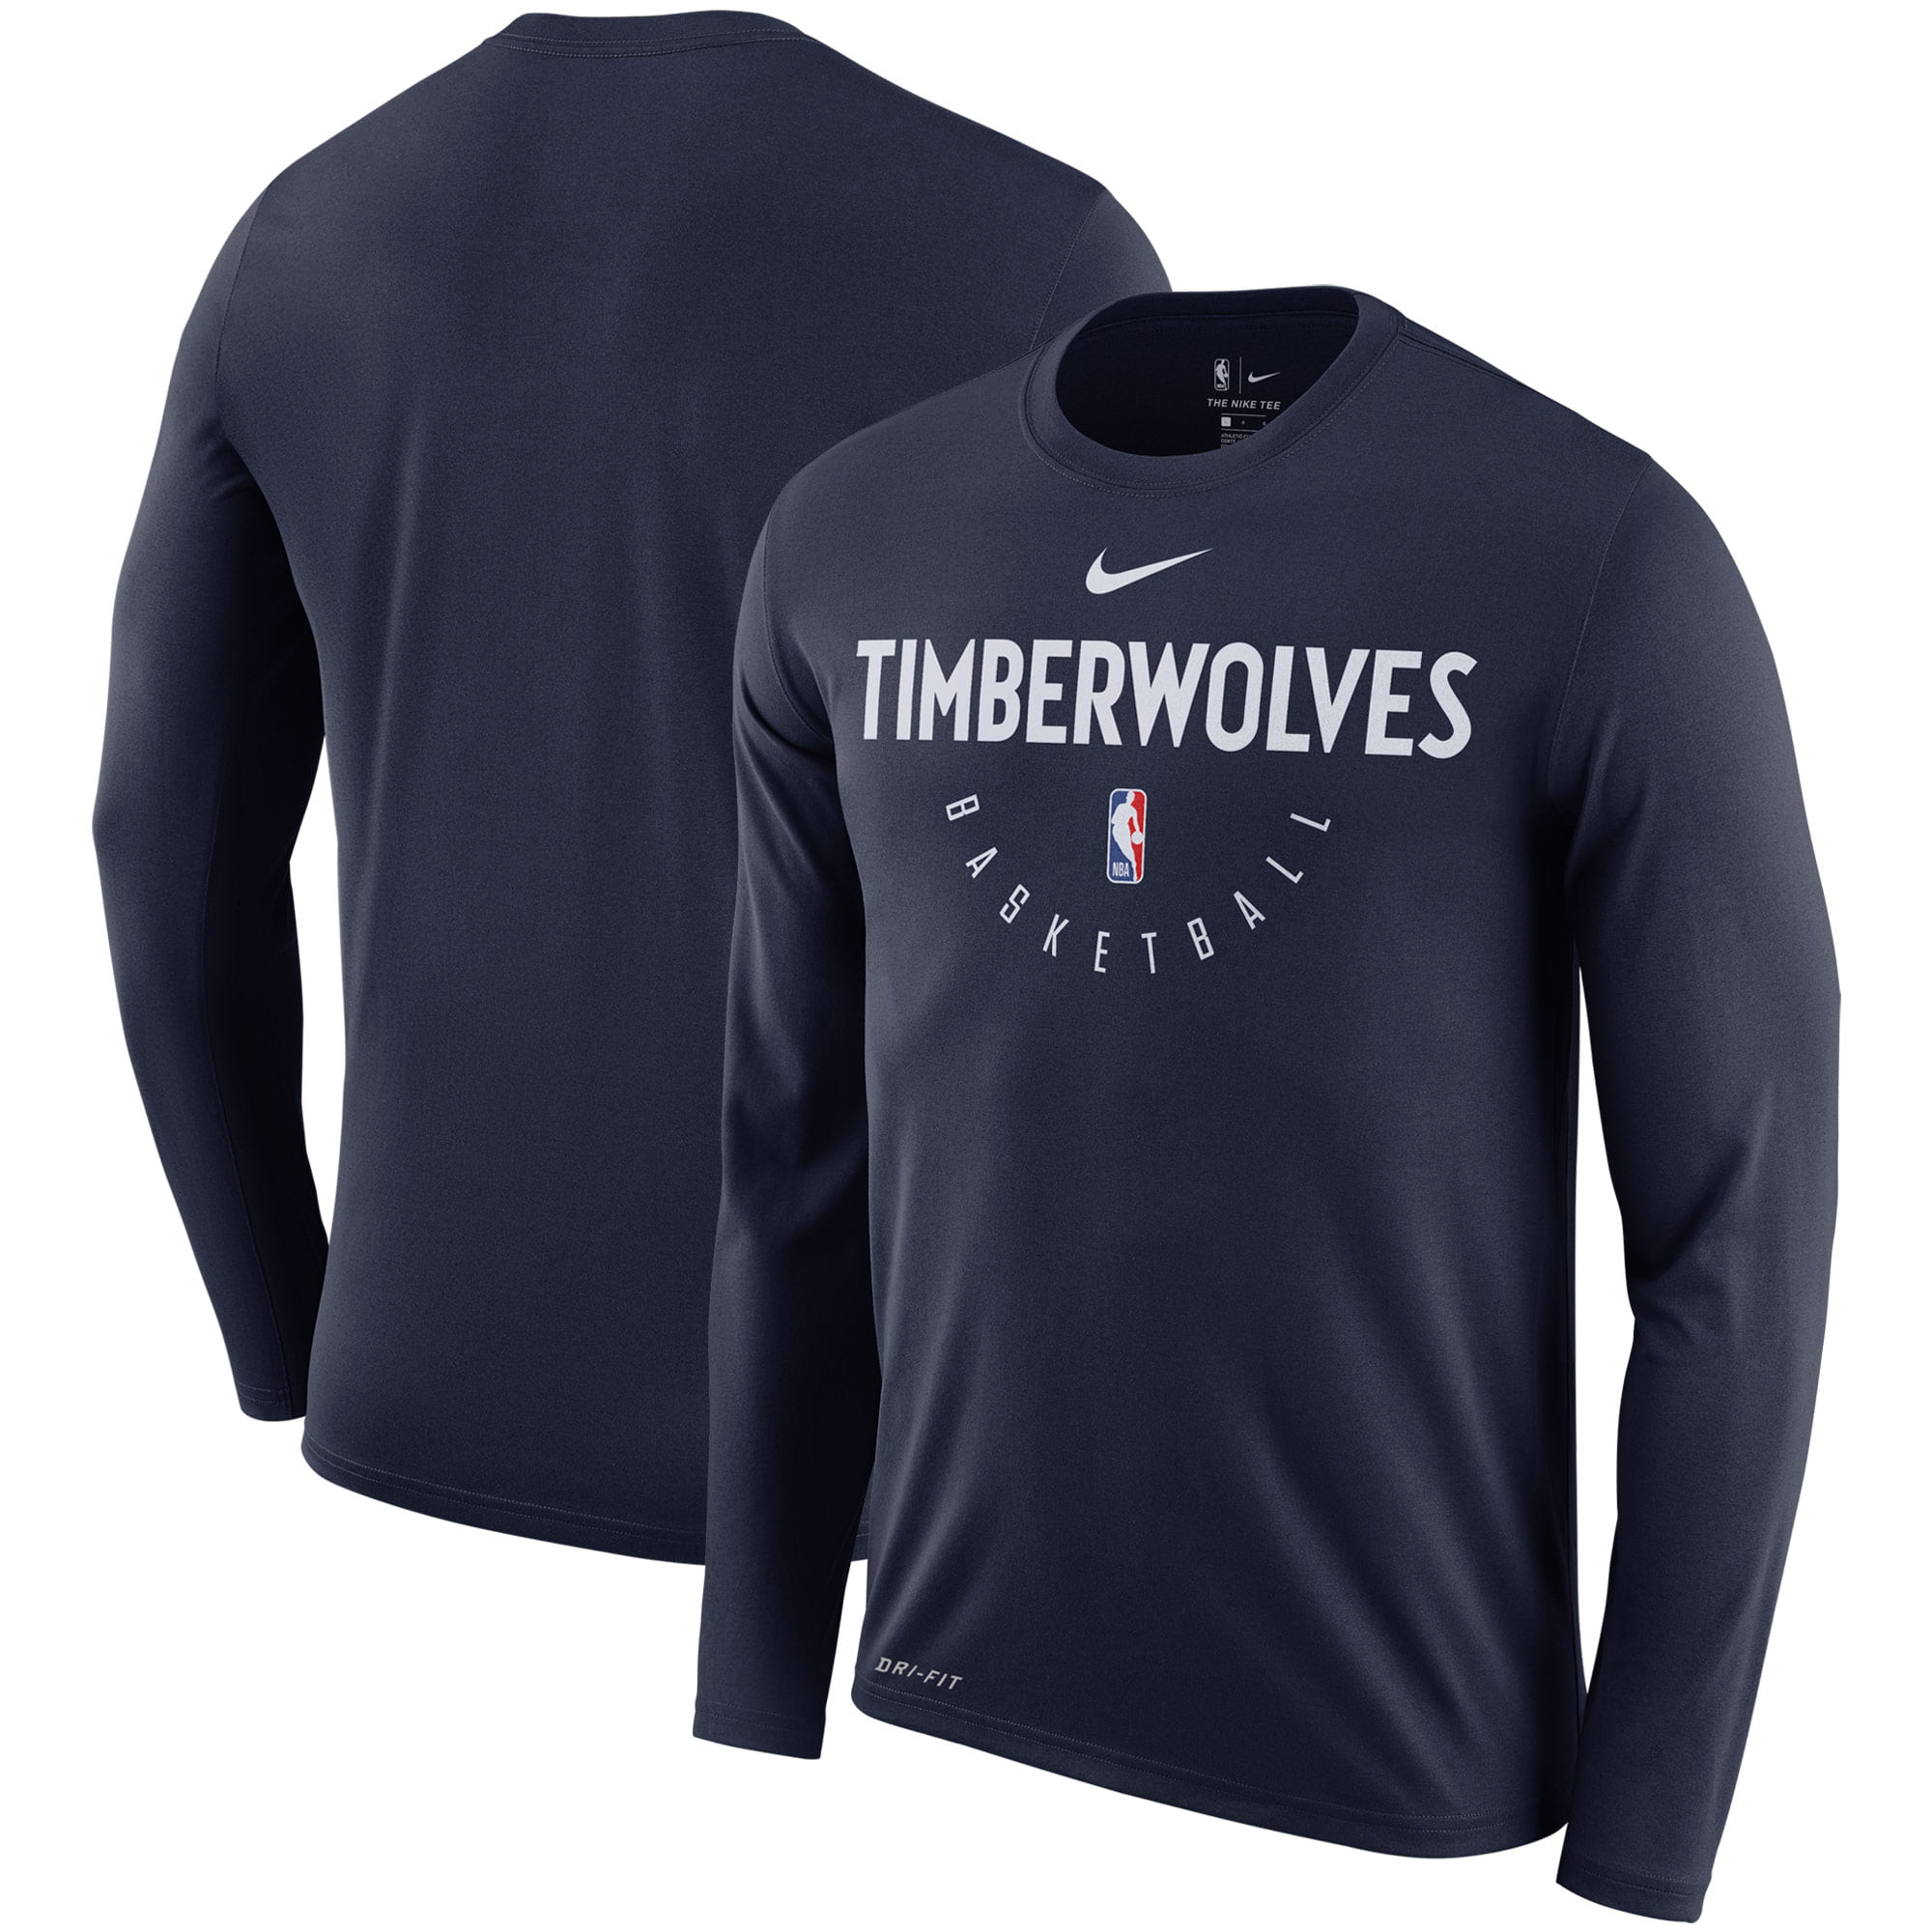 timberwolves practice jersey